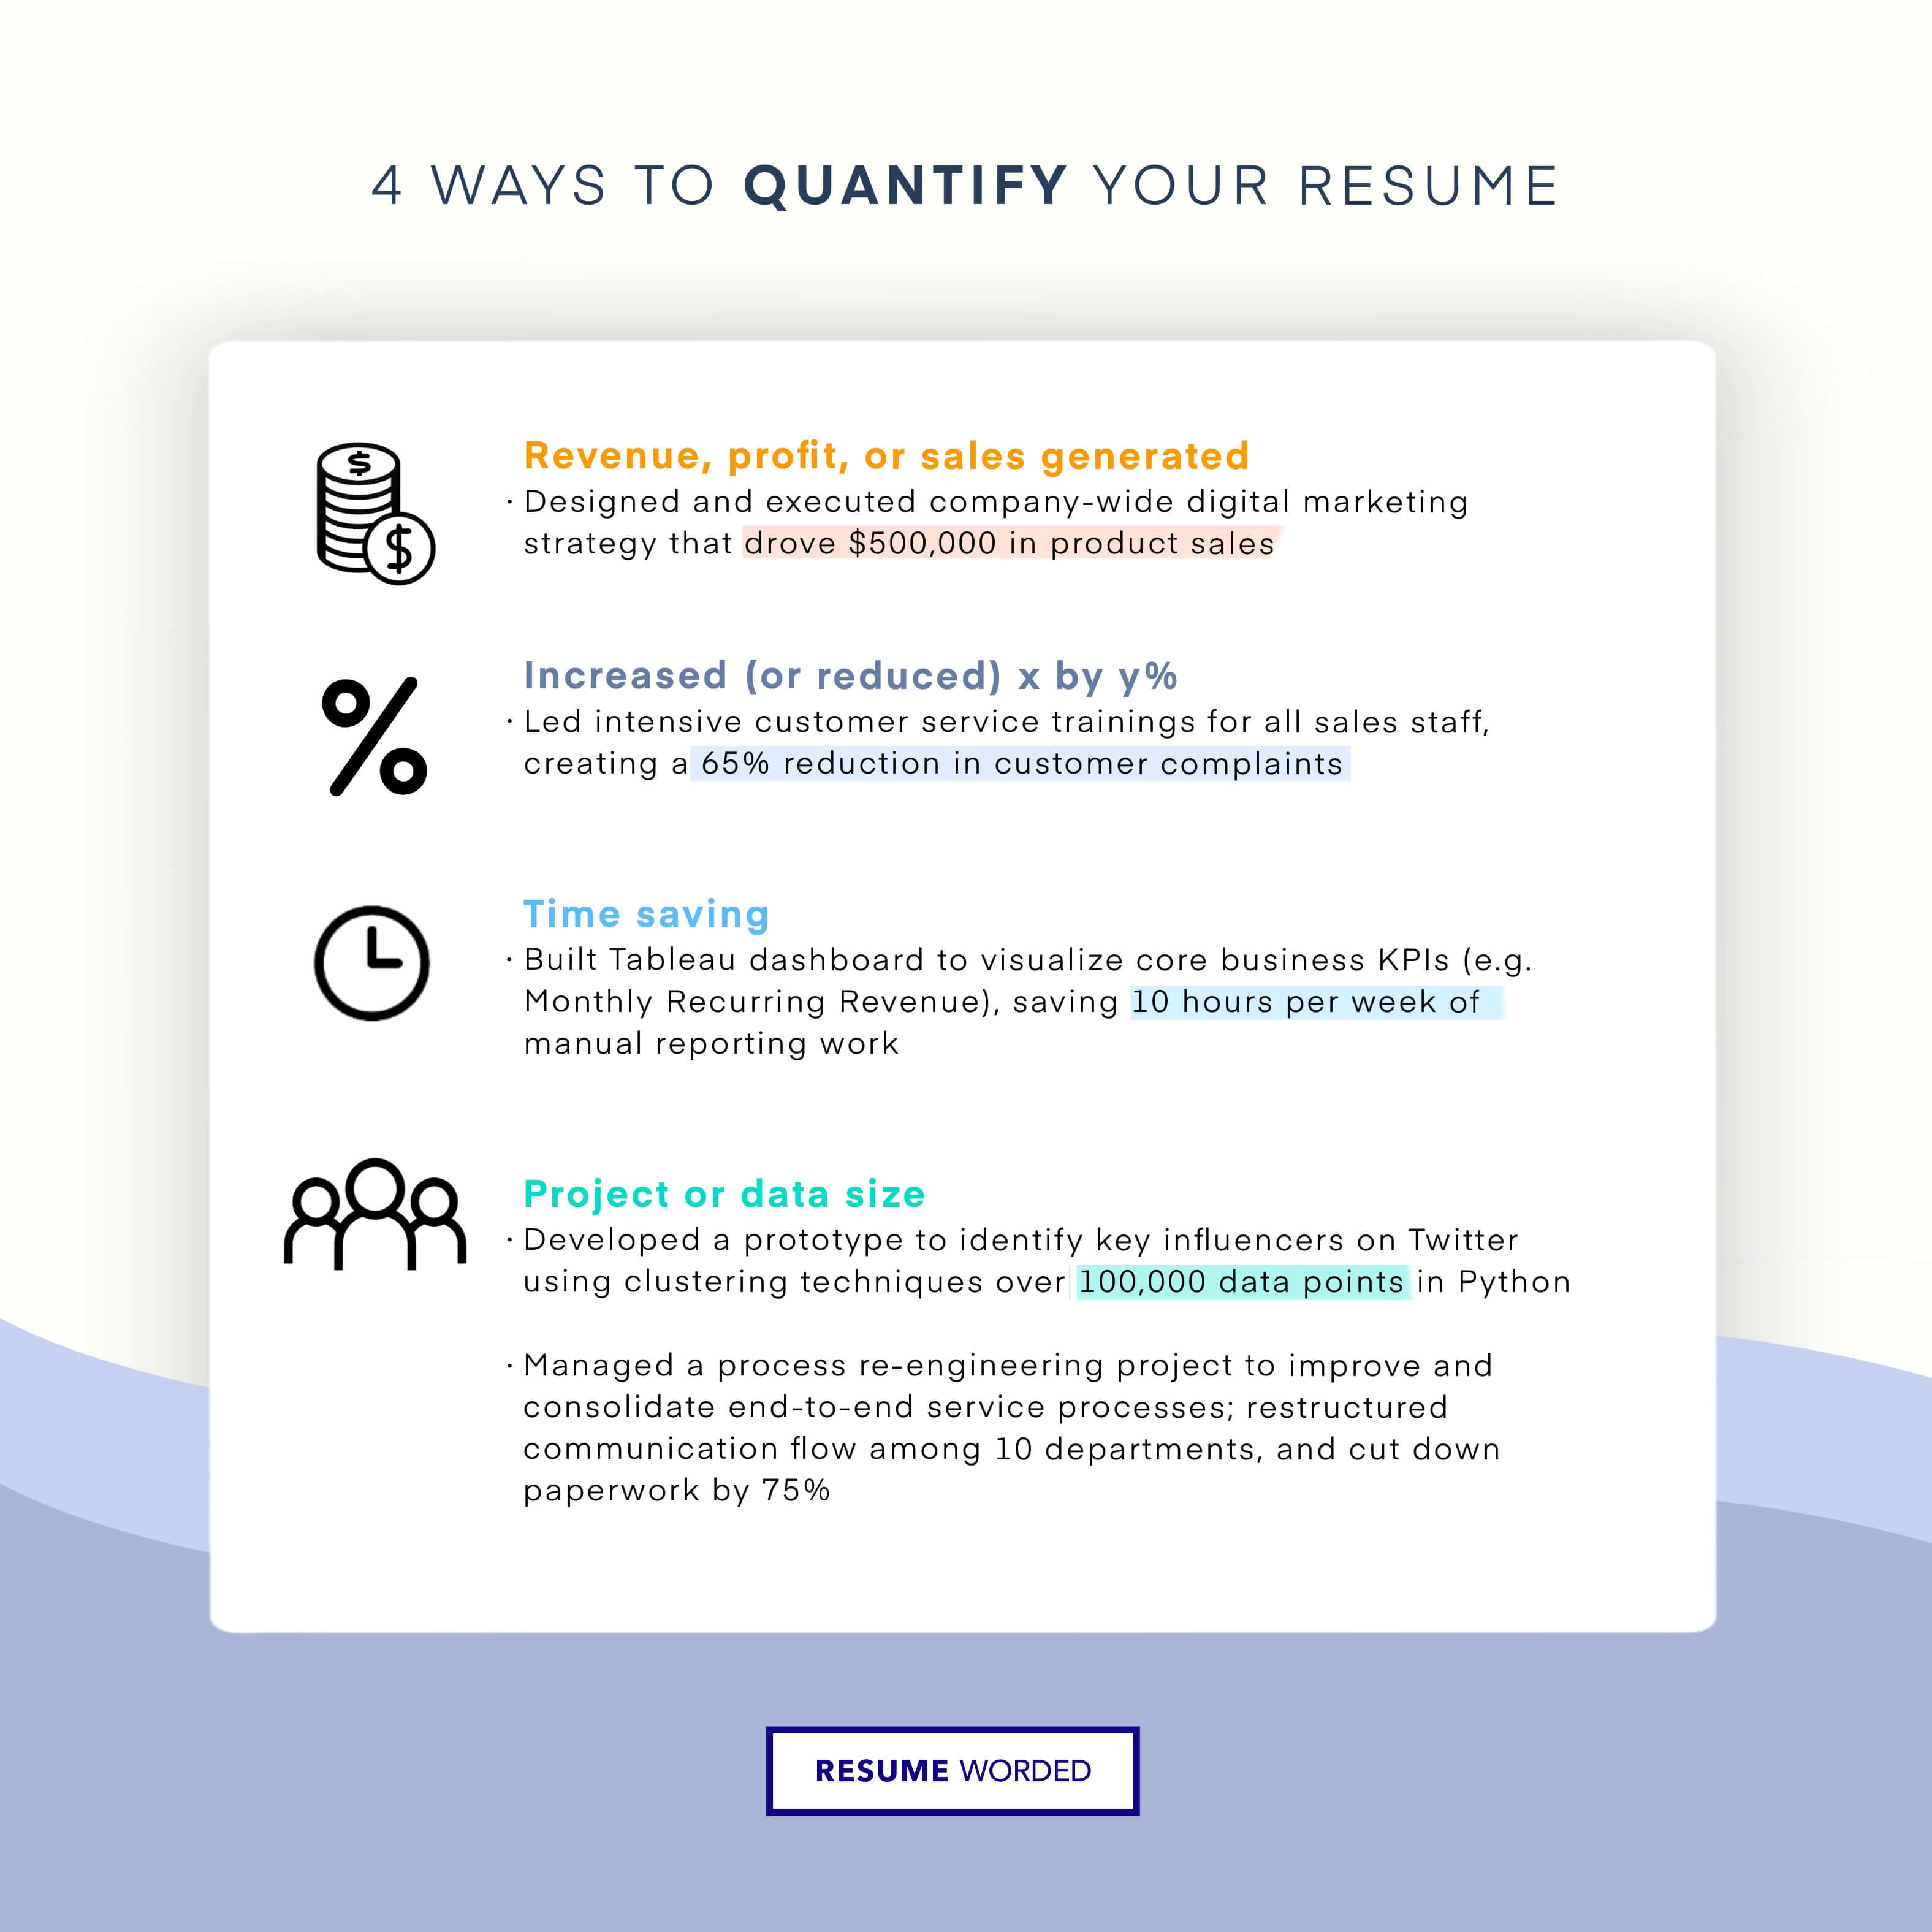 Quantify your workload capabilities. - Home Care Coordinator Resume